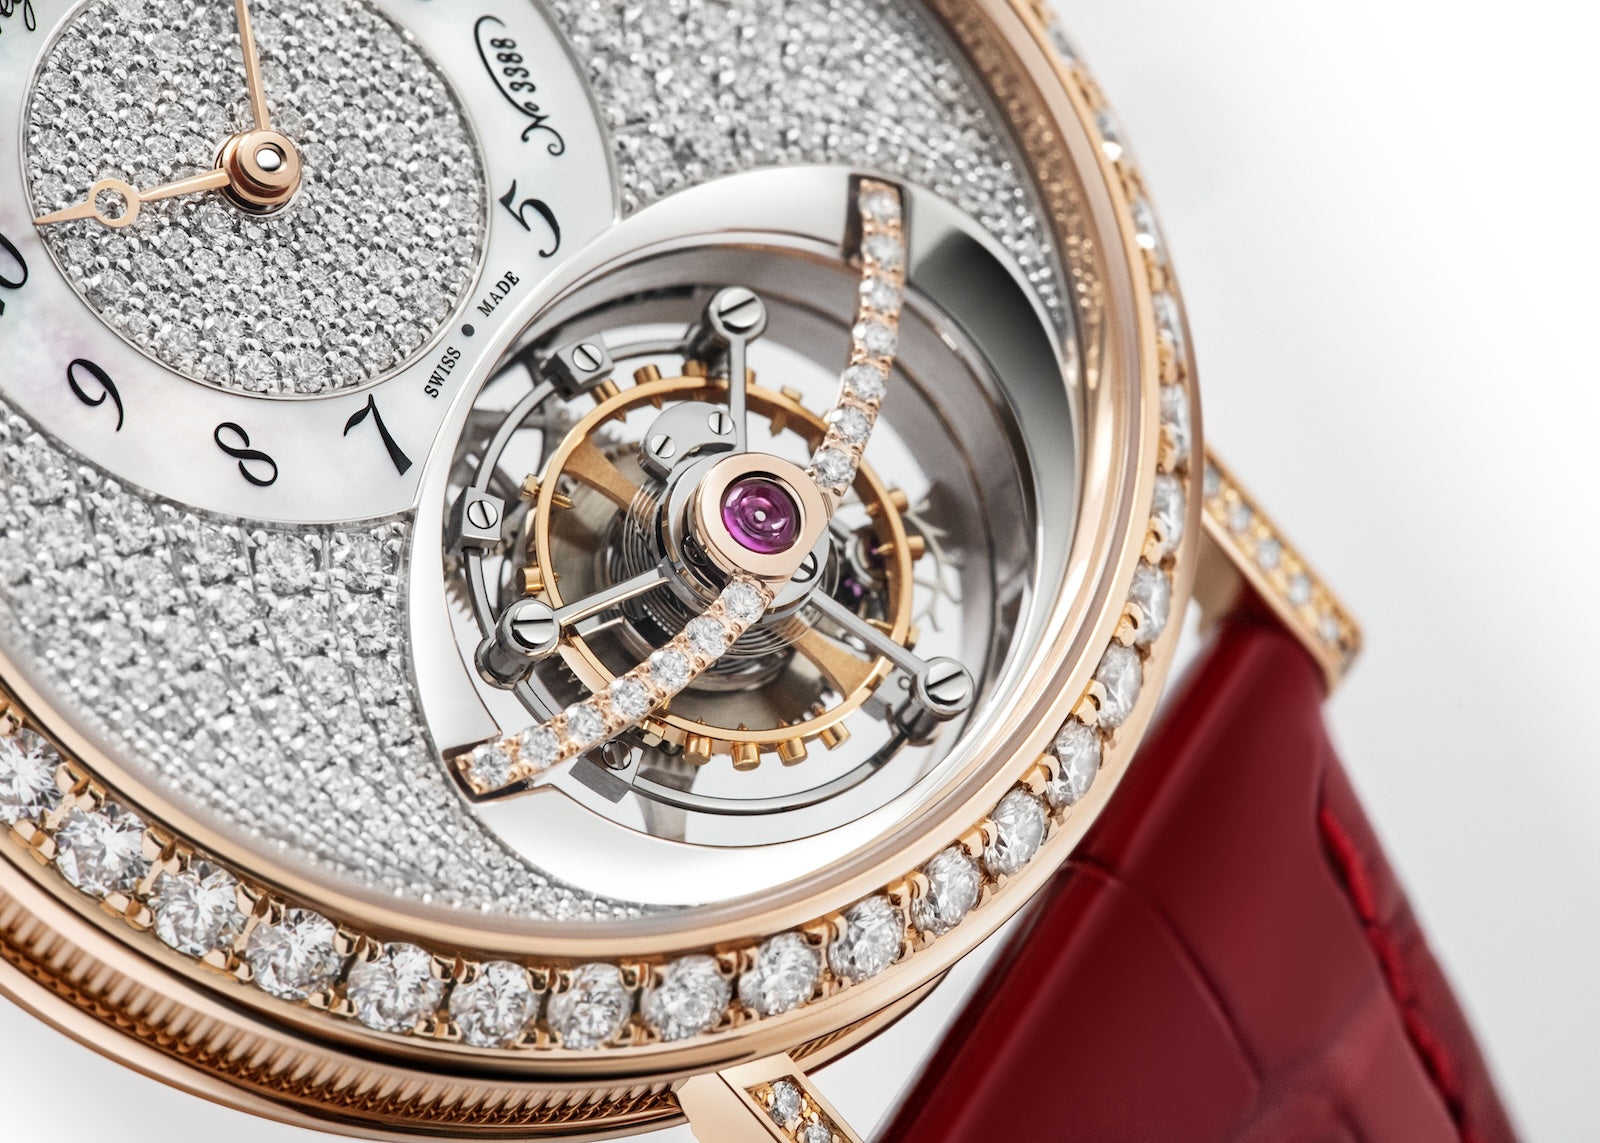 Breguet Classique Tourbillon 18K Rose Gold & Diamonds Lady's Watch